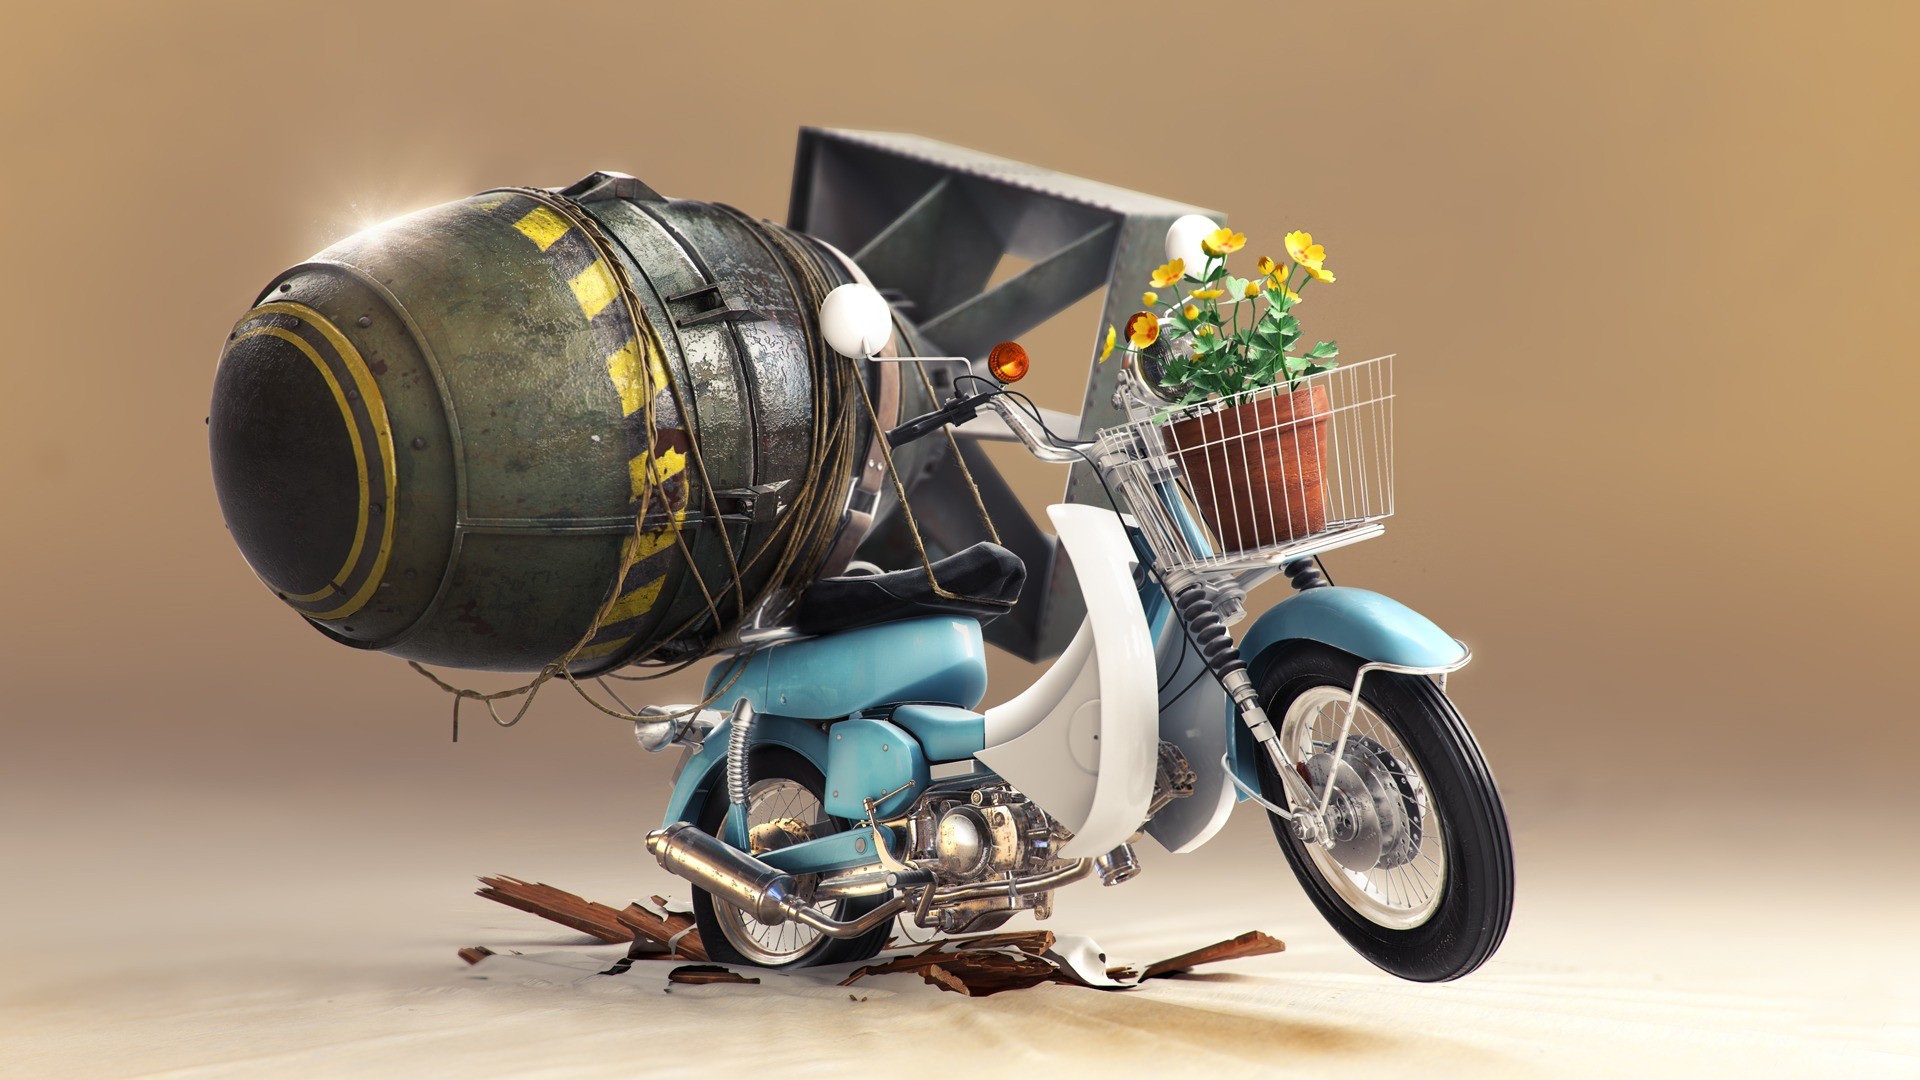 Digital Art Creativity Motorcycle Ropes Baskets Flowers Wood Heavy Nuclear 1920x1080